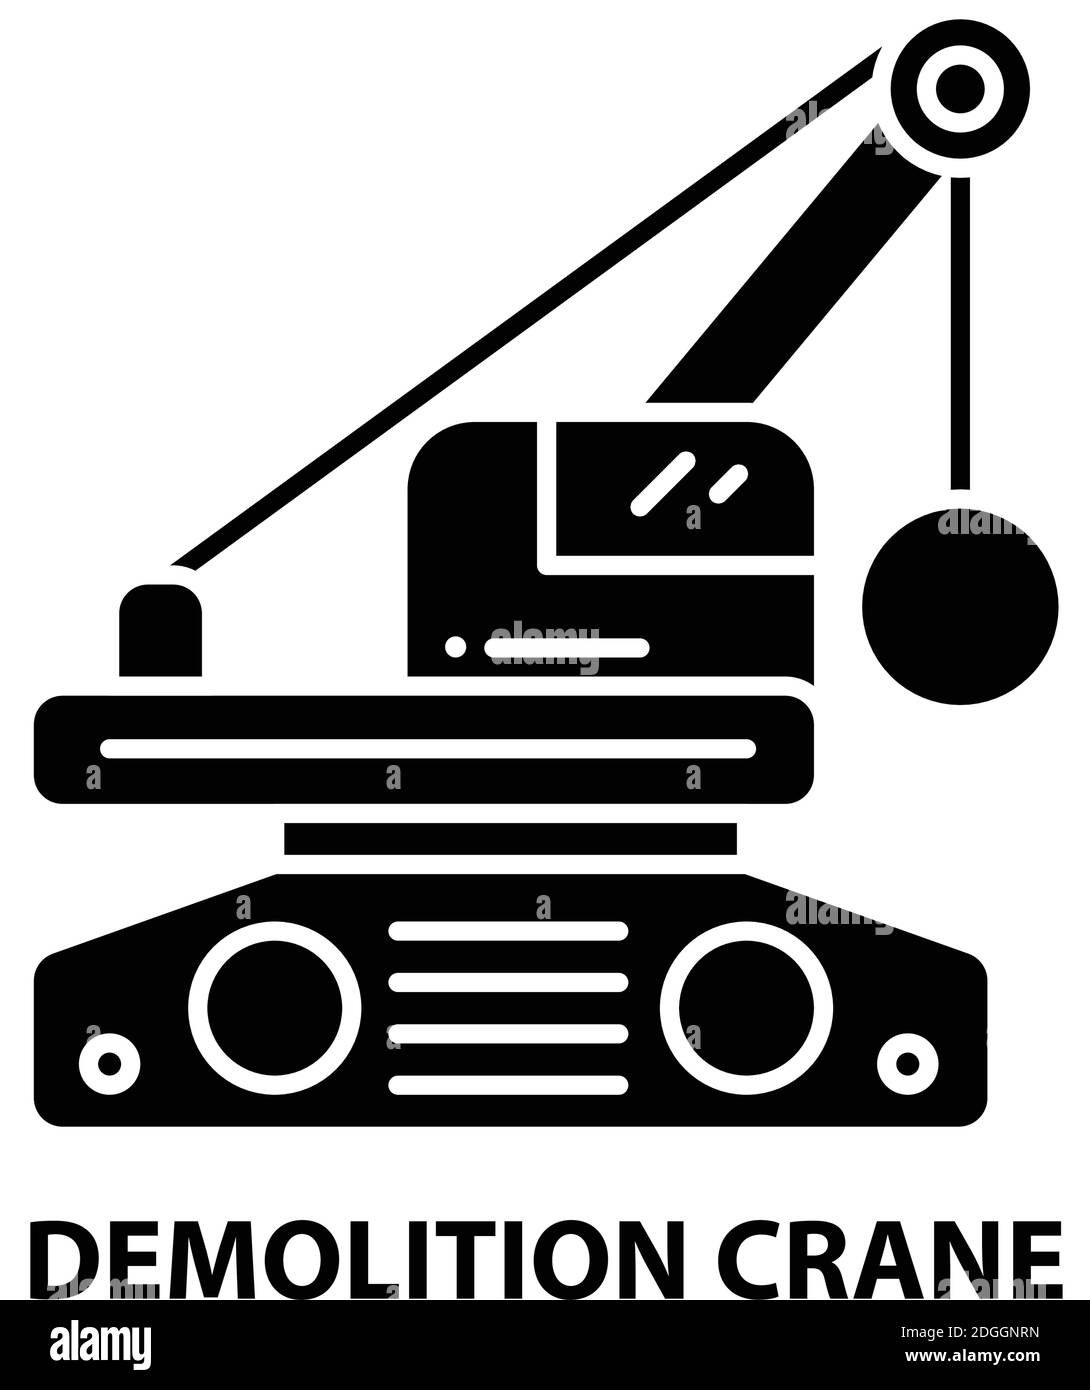 demolition crane icon, black vector sign with editable strokes, concept illustration Stock Vector